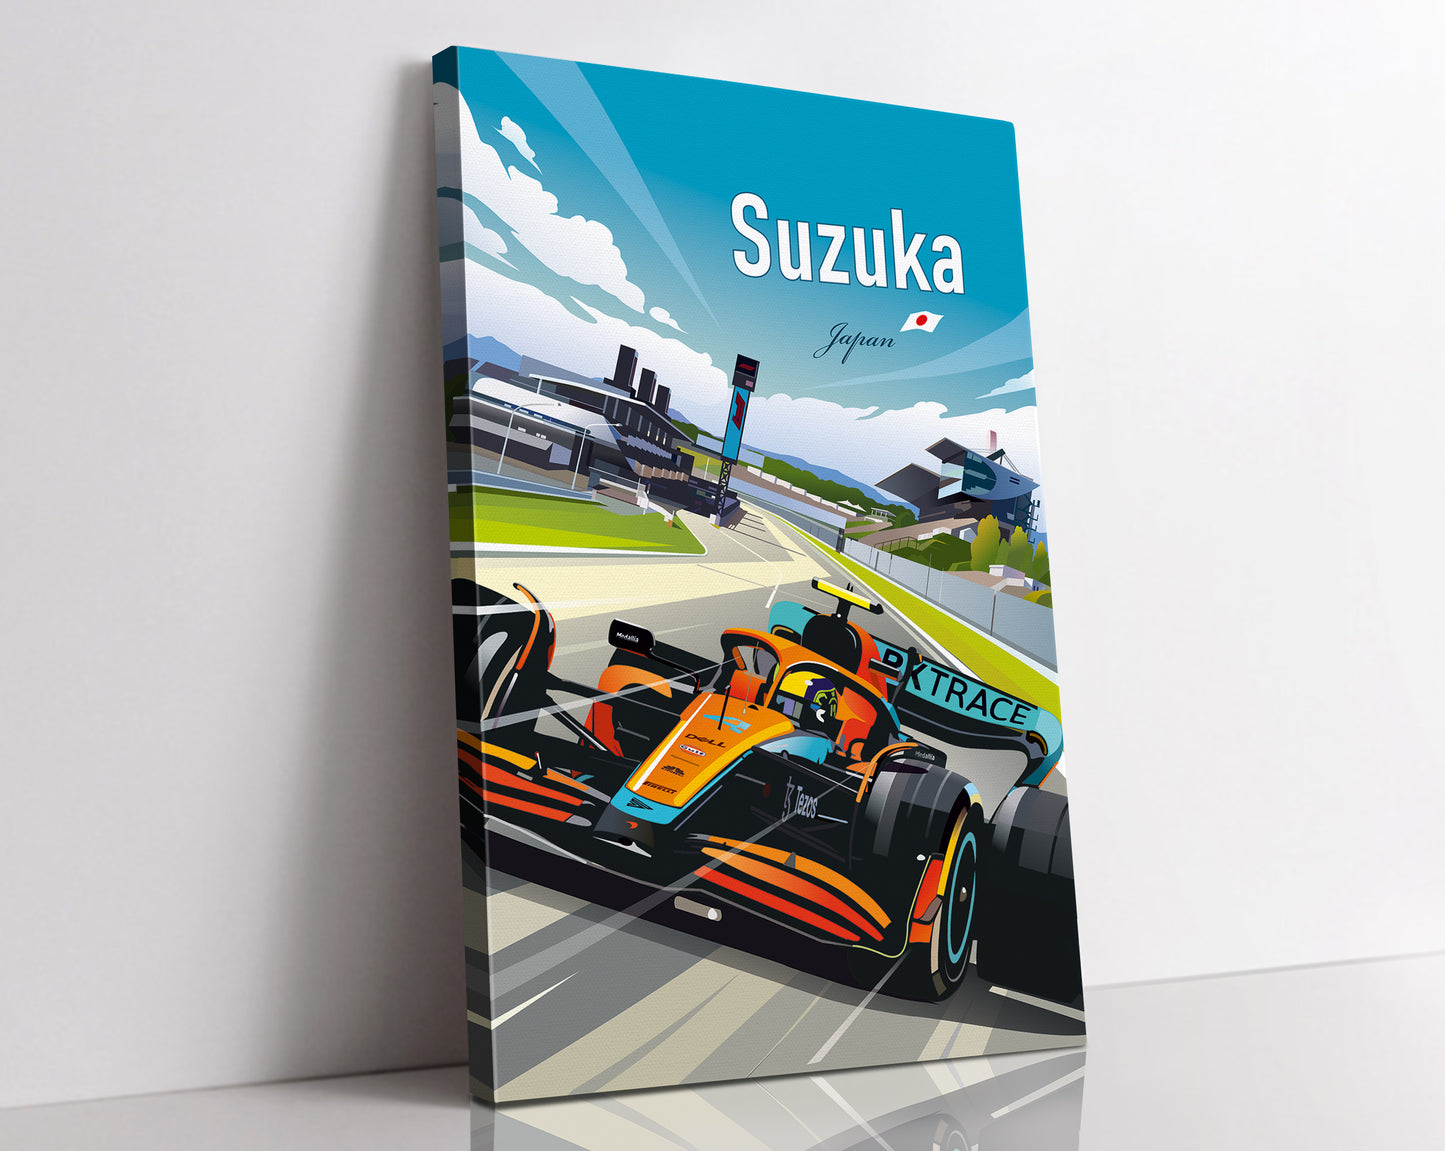 Suzuka F1 Canvas / McLaren Lando Norris / Japanese GP/ F1 Wall Art